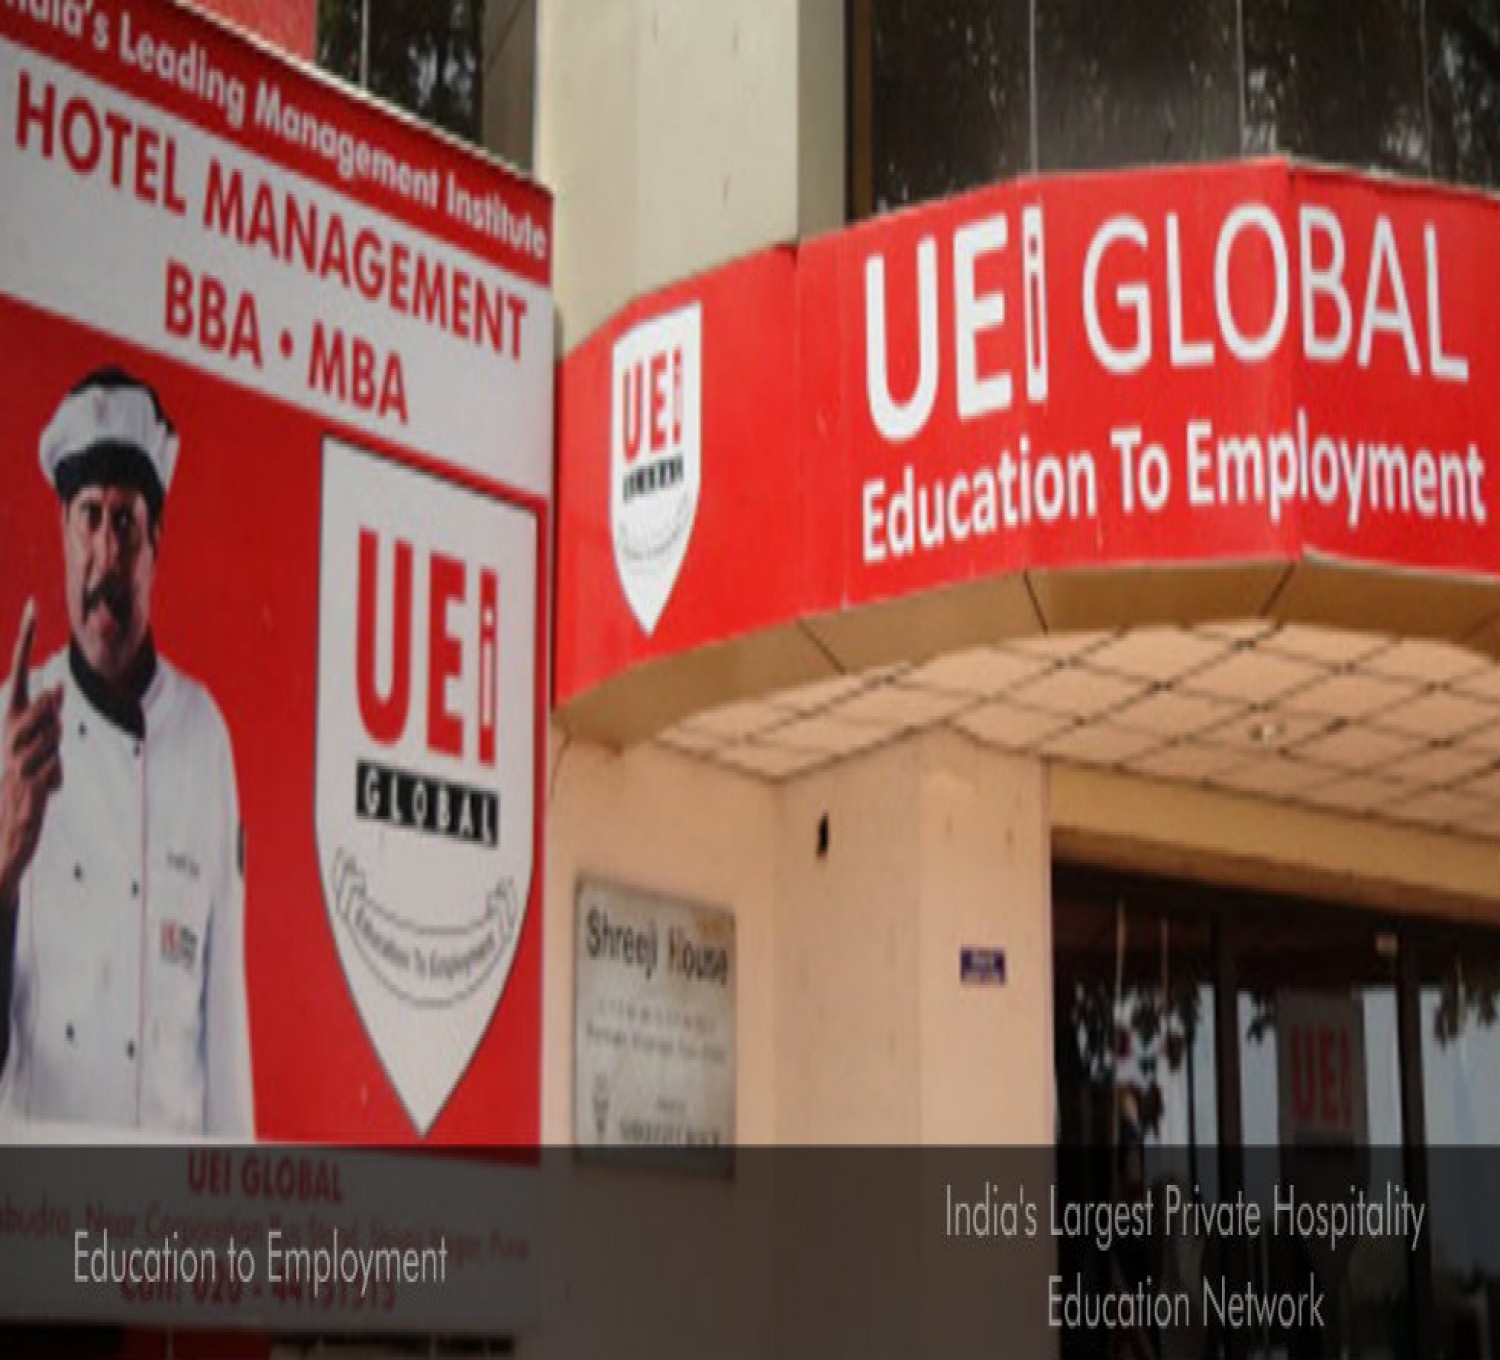 UEI Global Education-cover